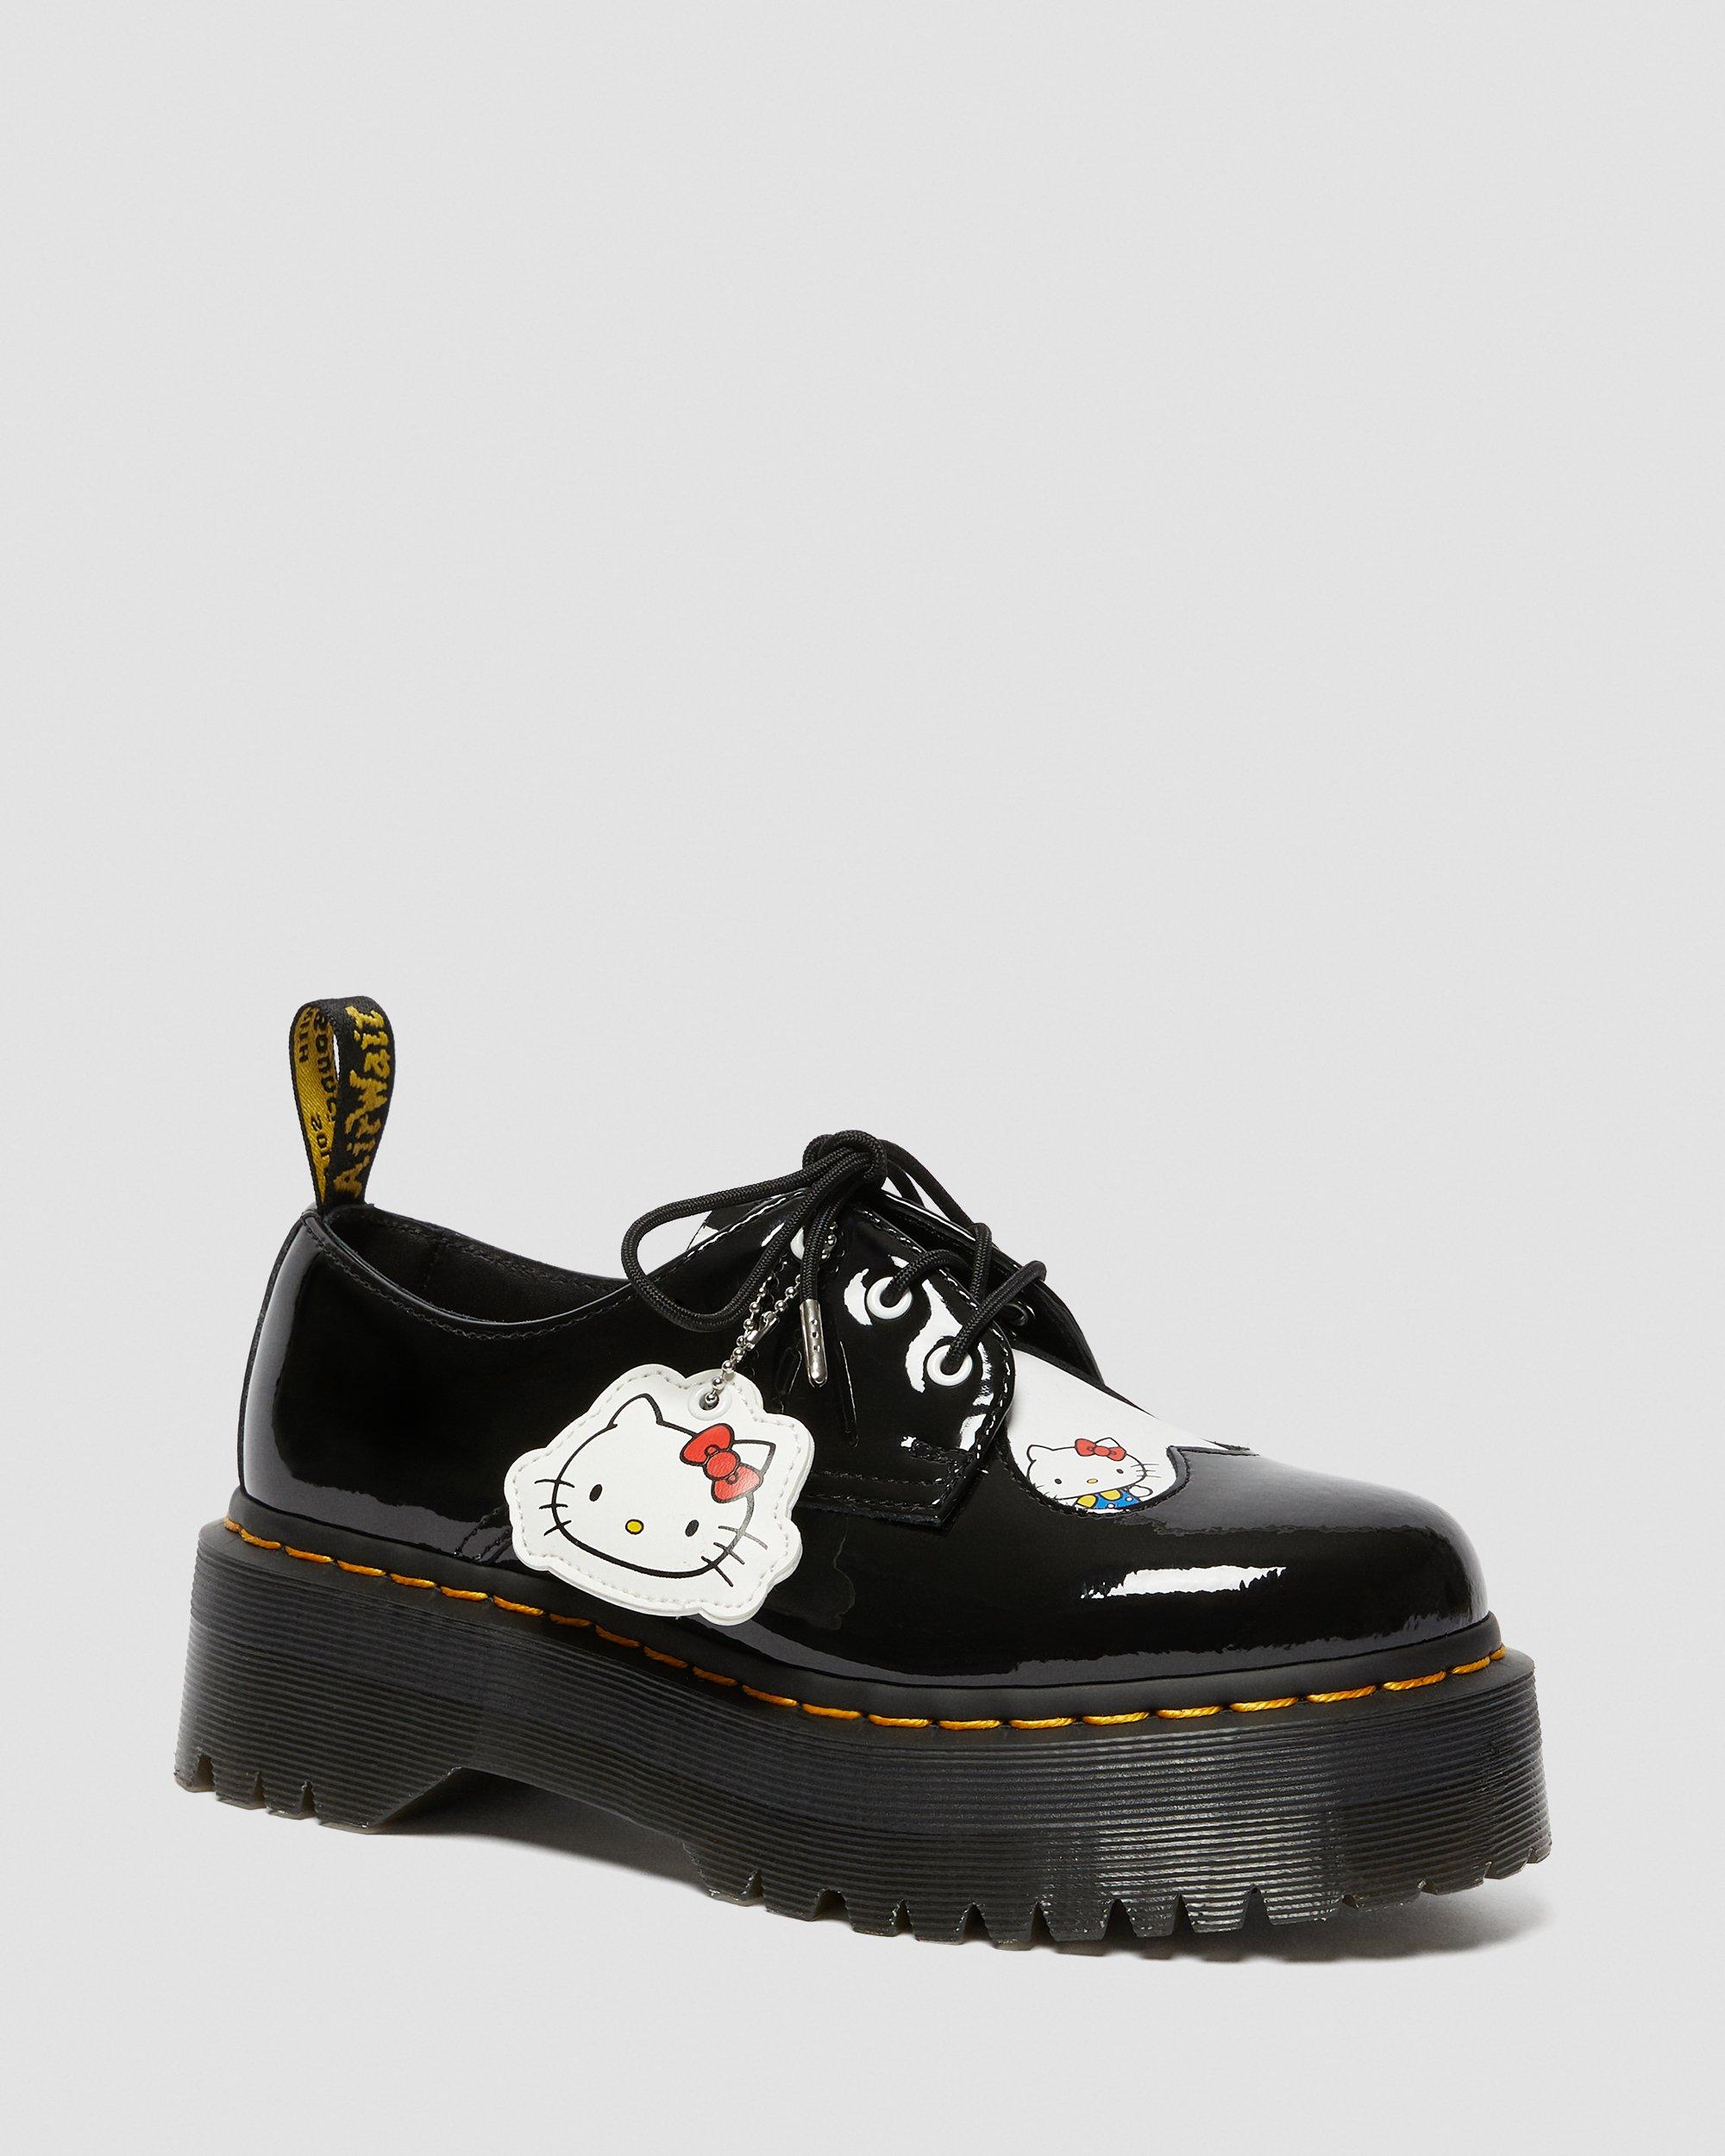 1461 Women's Hello Kitty Platform Shoes in Black+White